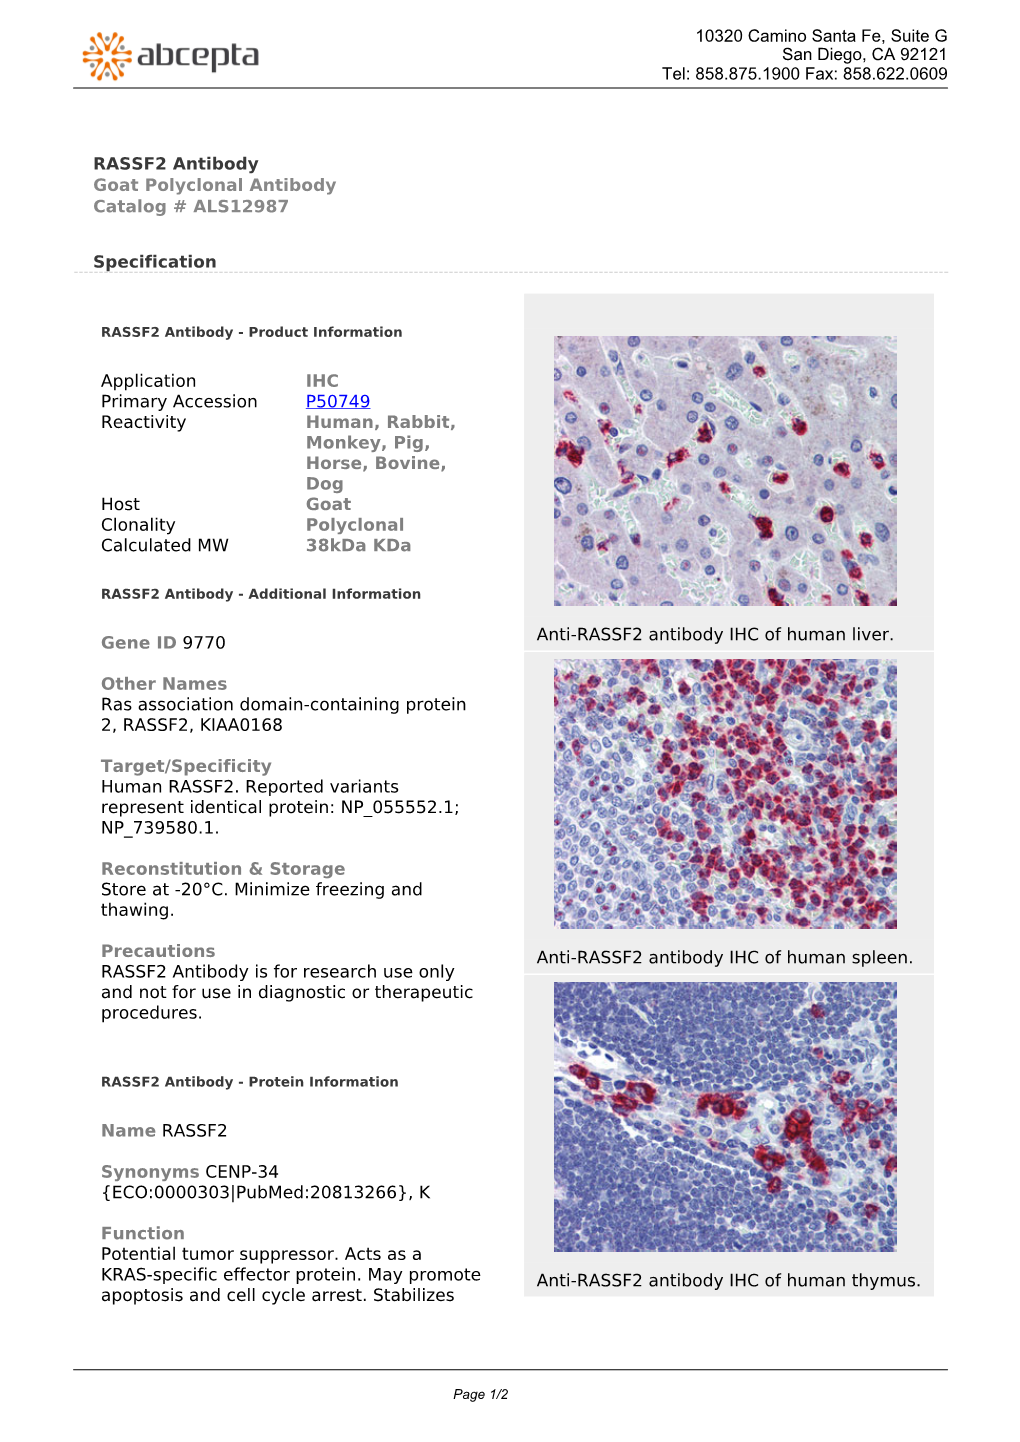 RASSF2 Antibody Goat Polyclonal Antibody Catalog # ALS12987